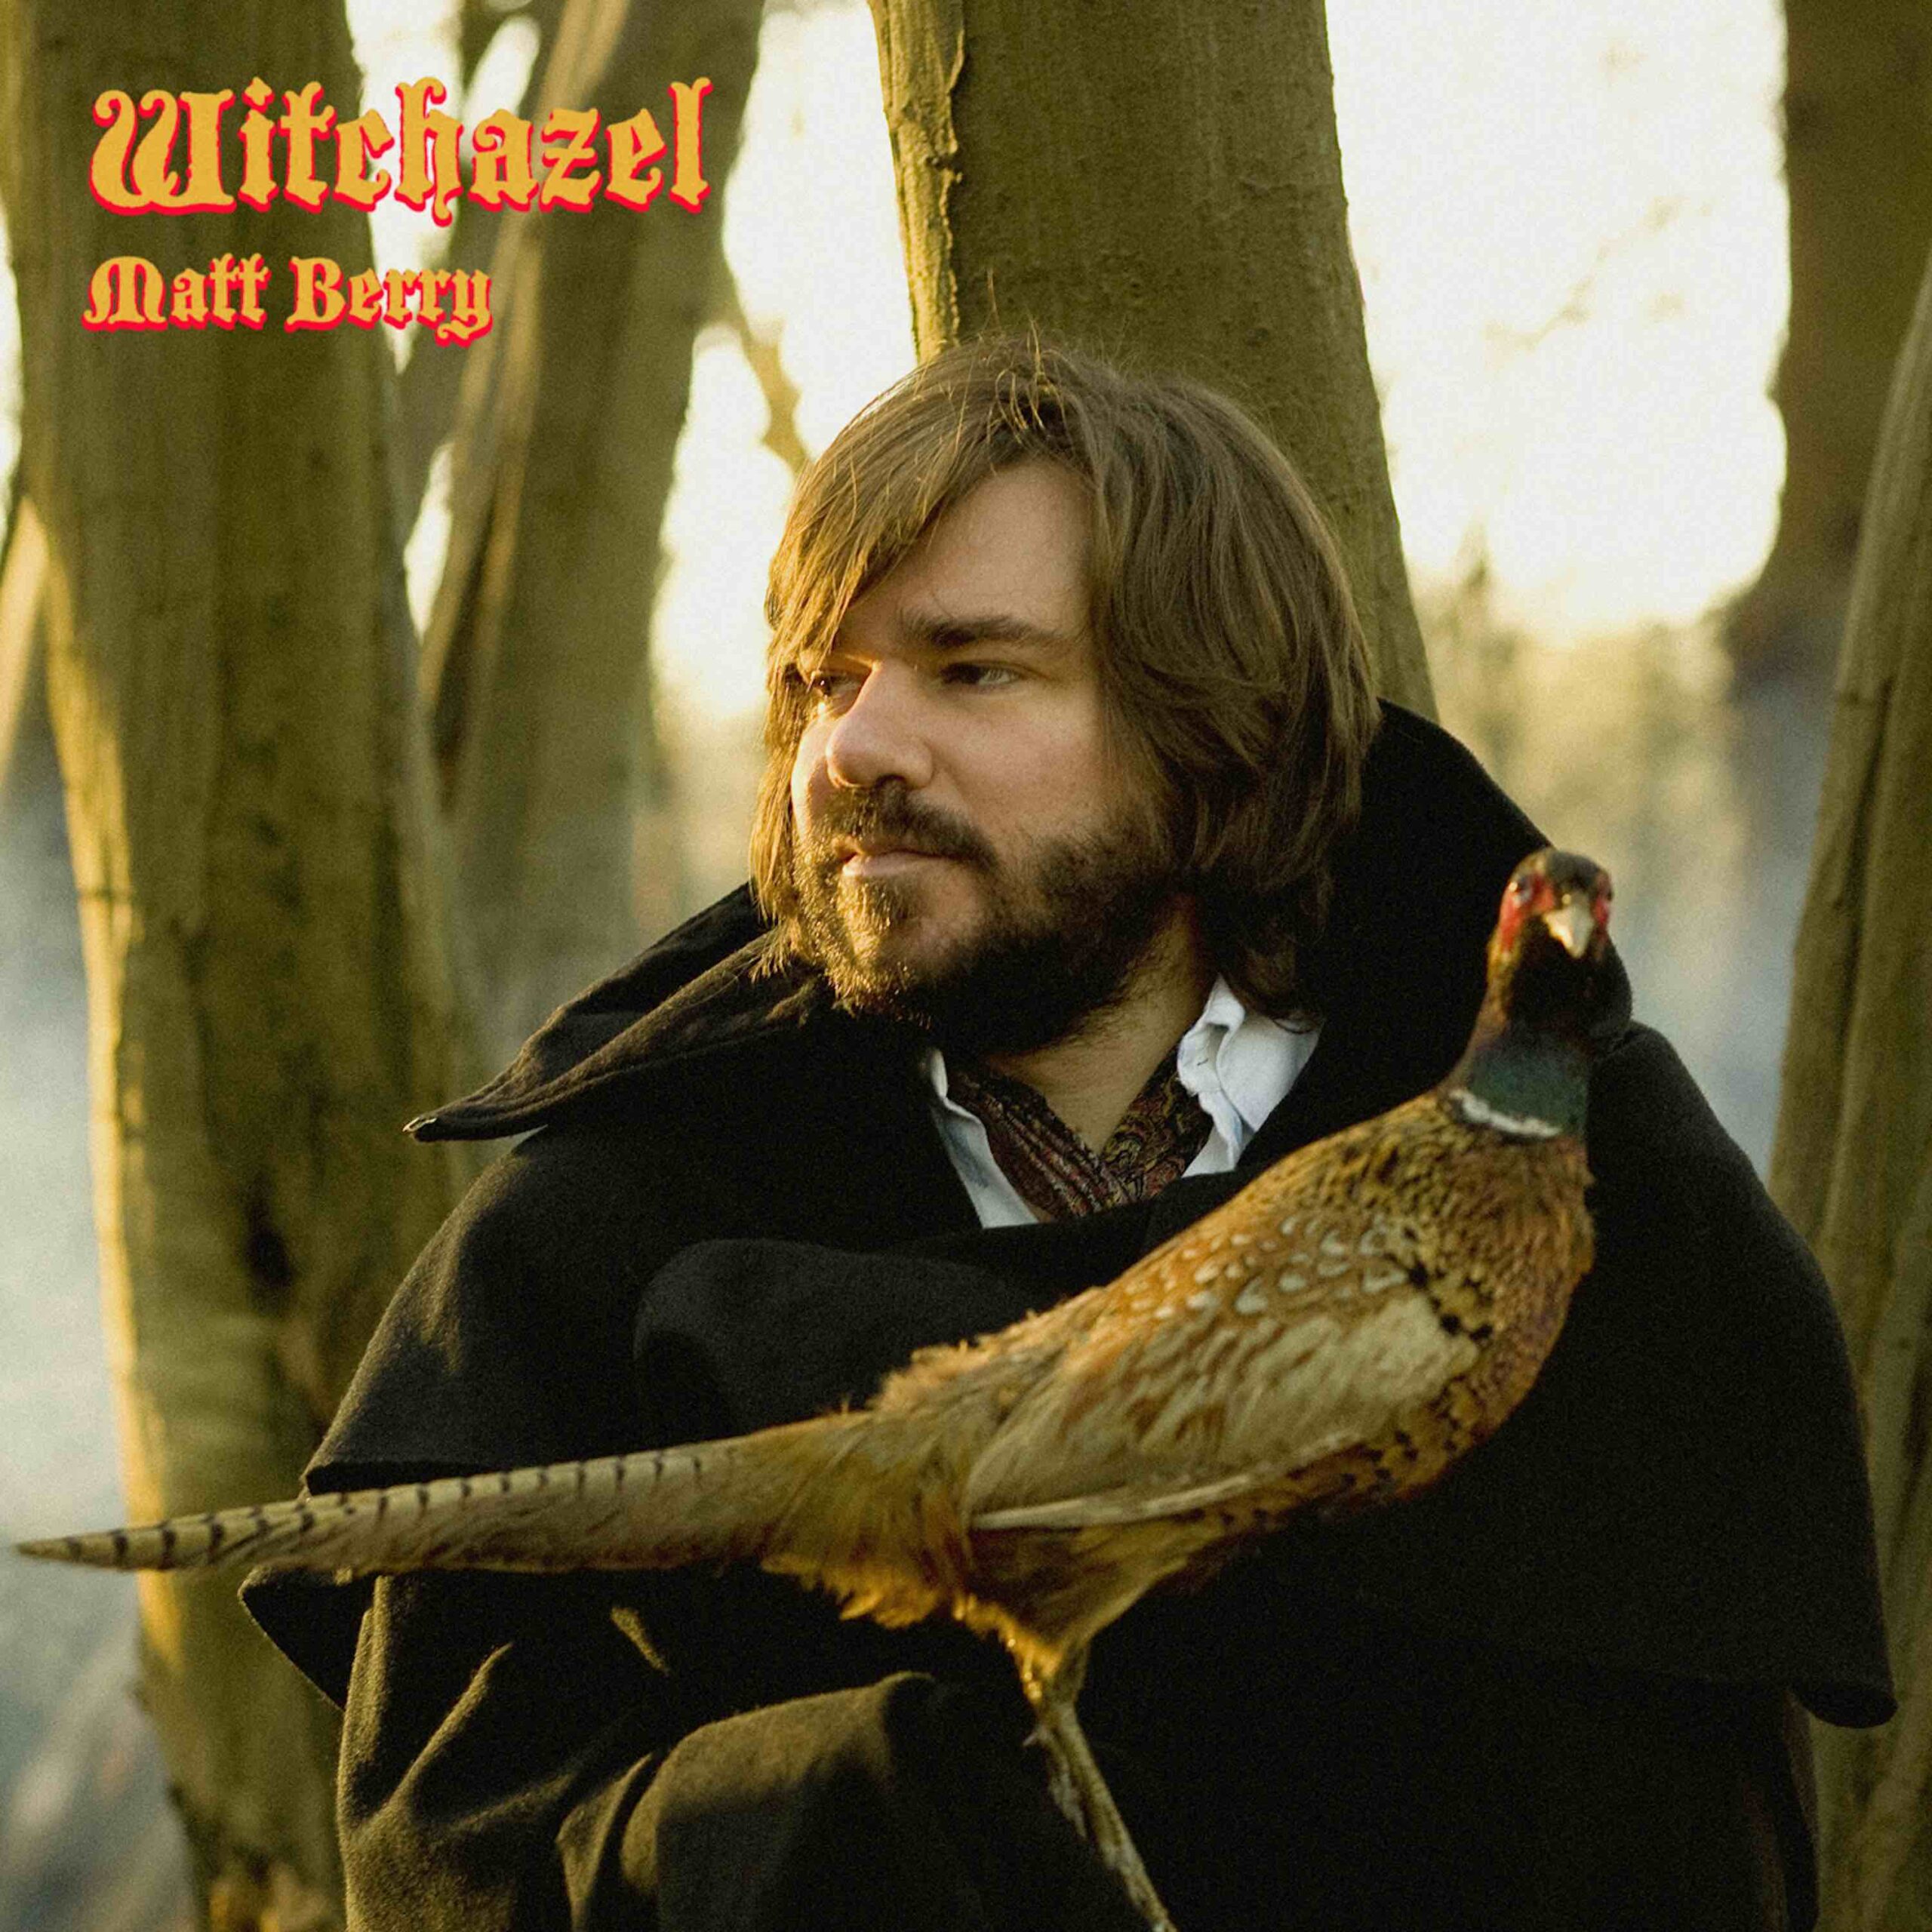 Matt Berry vinyl reissues – Witchazel & Kill The Wolf